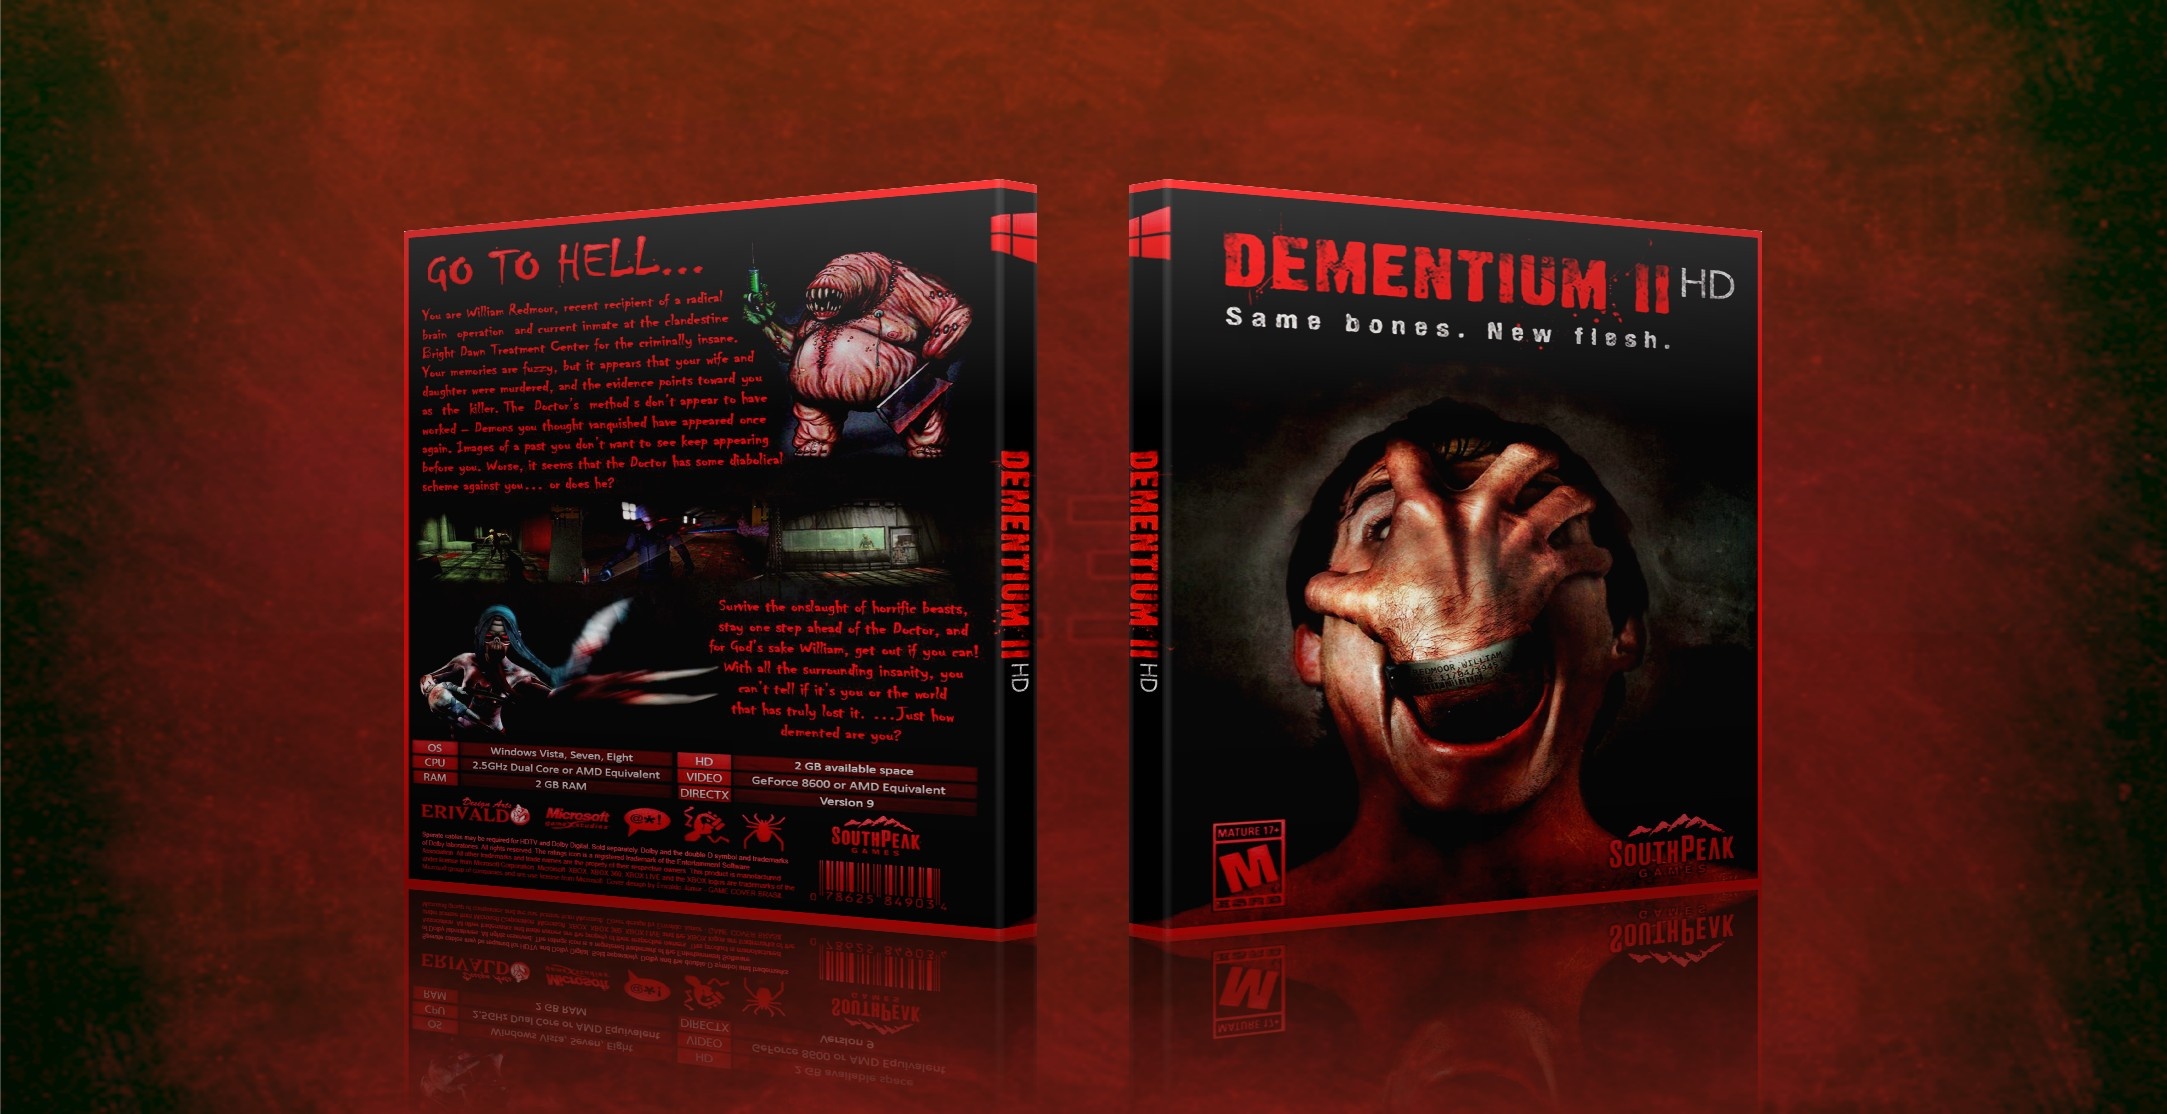 download dementium ii hd